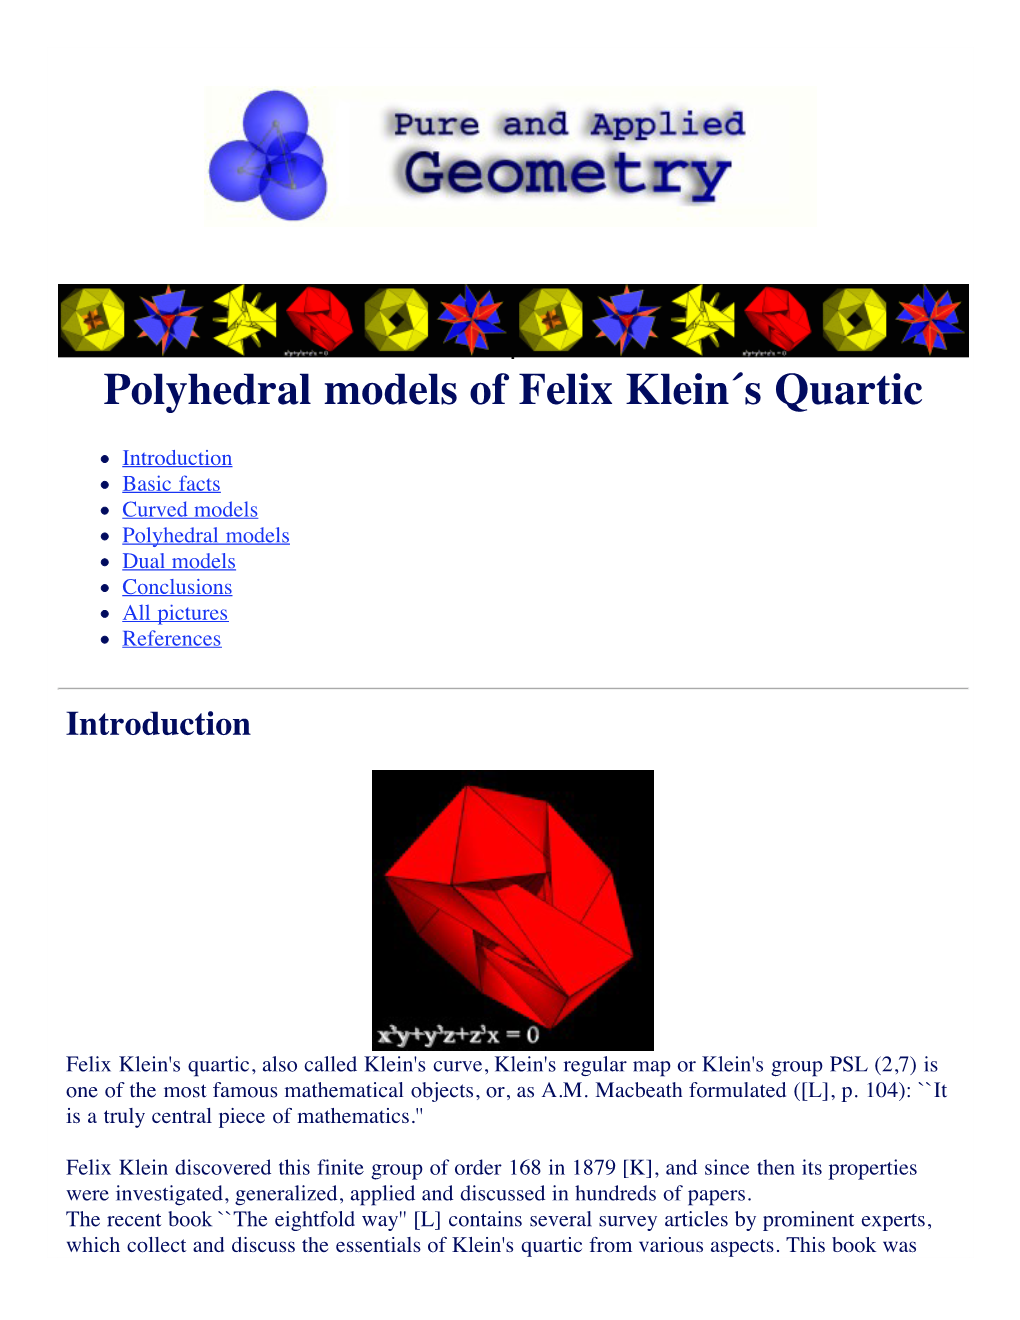 Polyhedral Models of Klein's Quartic